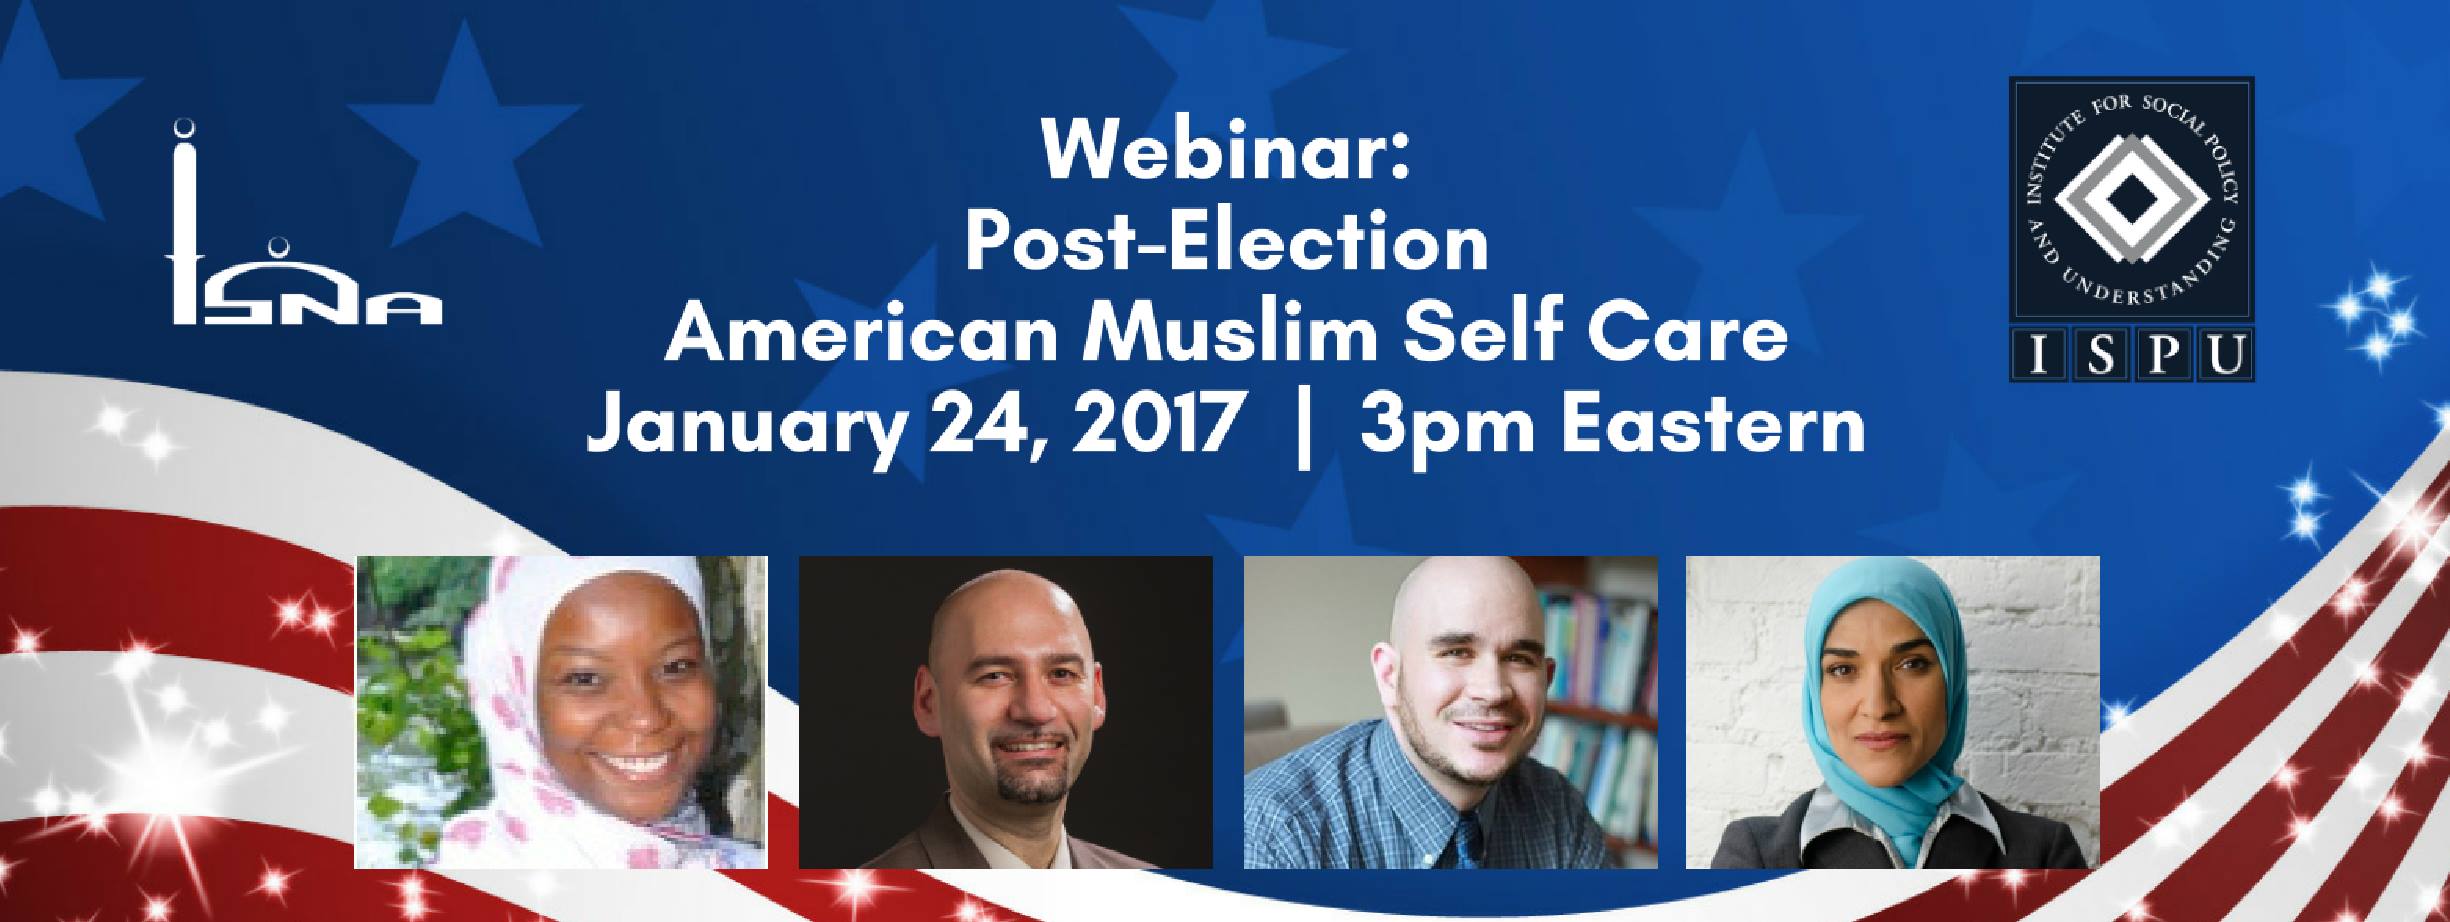 Webinar: Post-Election American Muslim Self Care